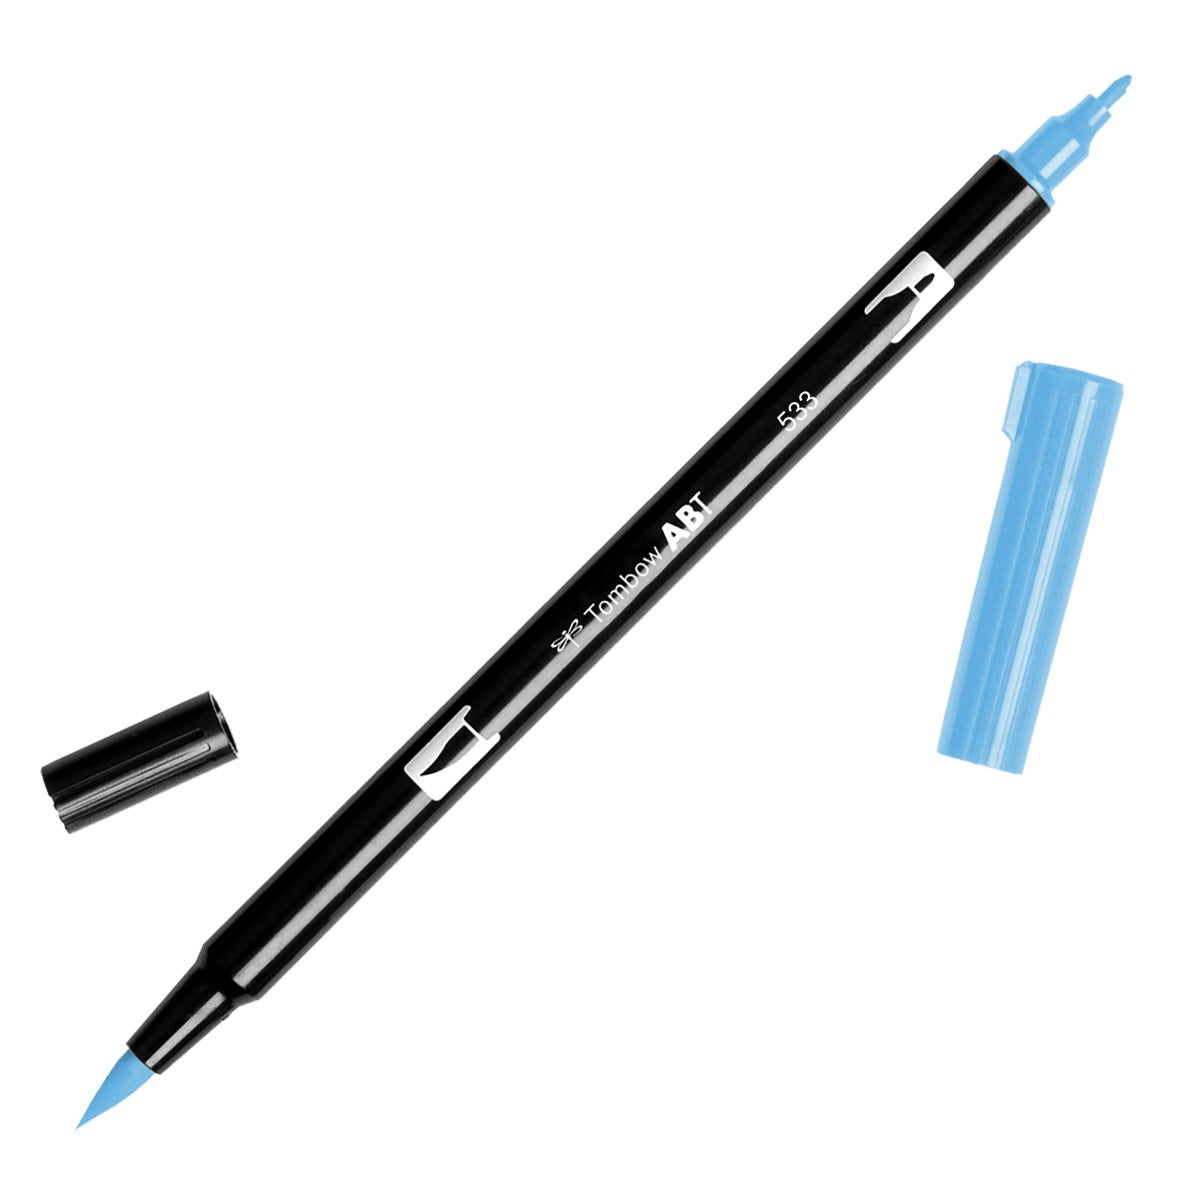 Tombow Dual Brush Pen 533 Peacock Blue